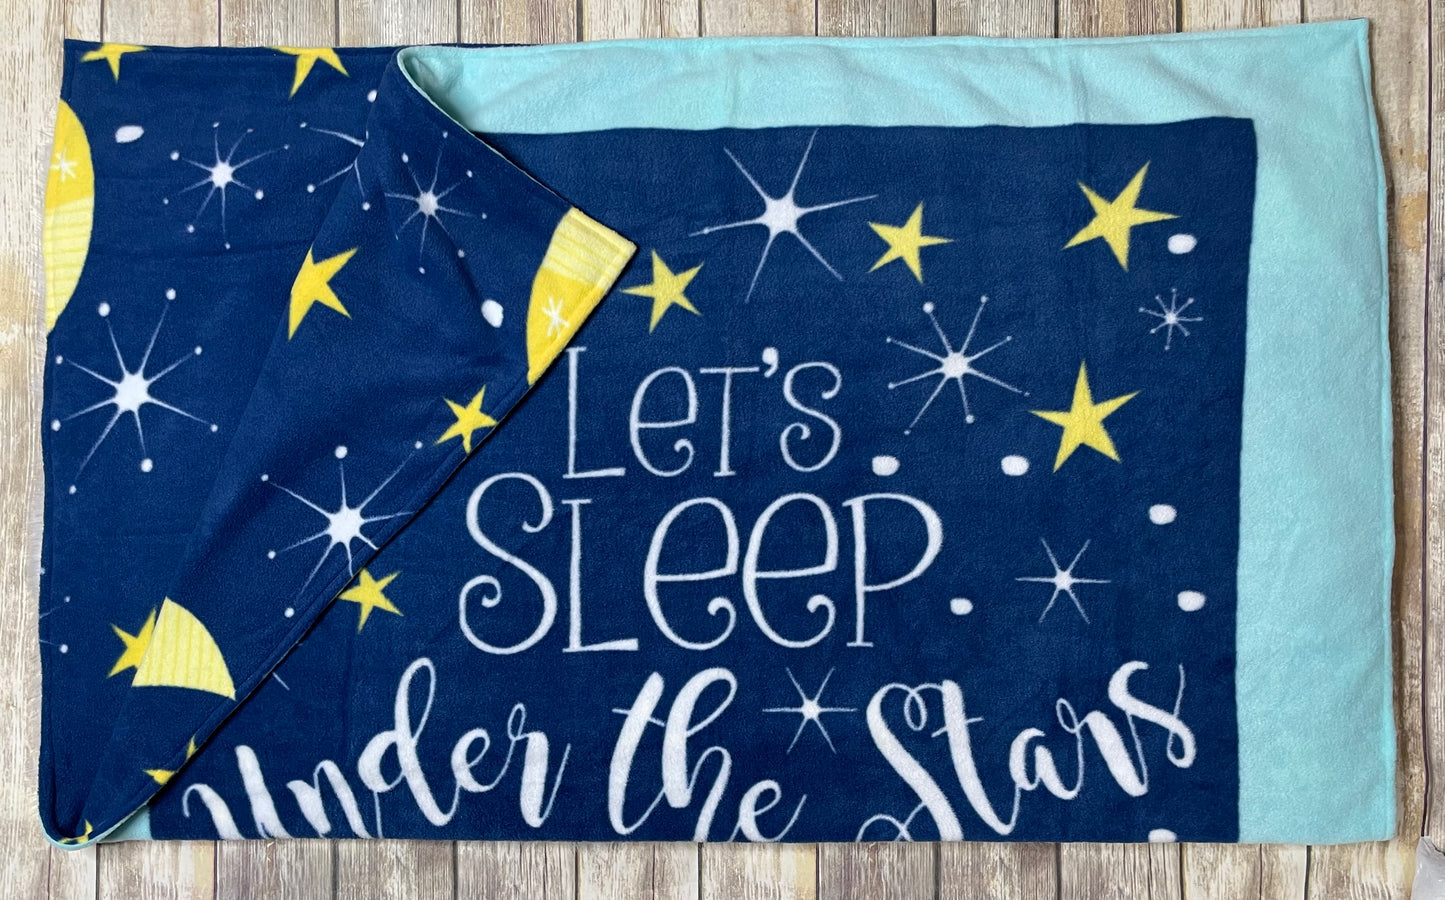 Let’s sleep under the stars!